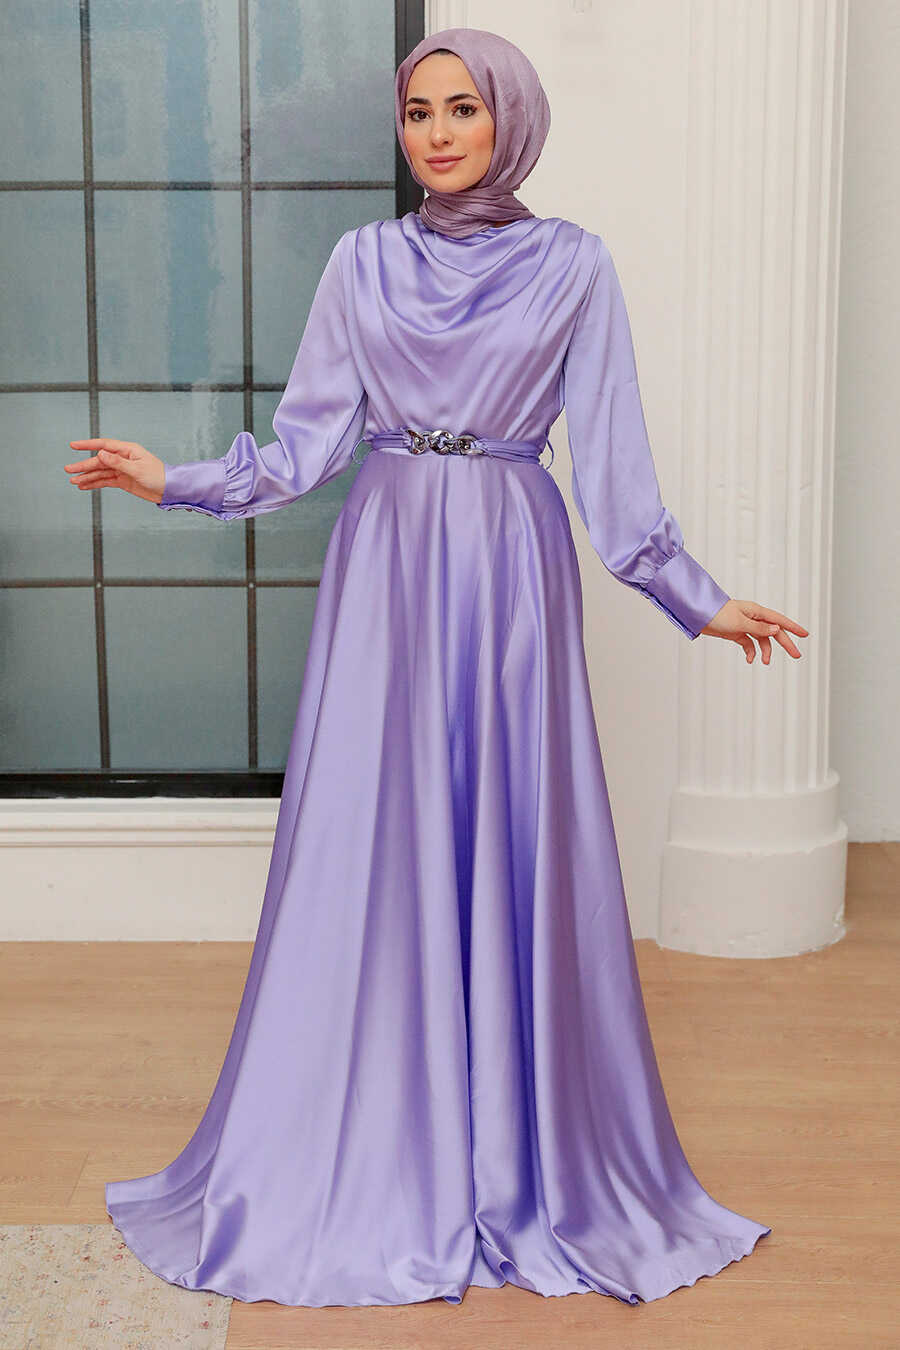 Nikkah | Engagement dresses, Muslim couples, Dress